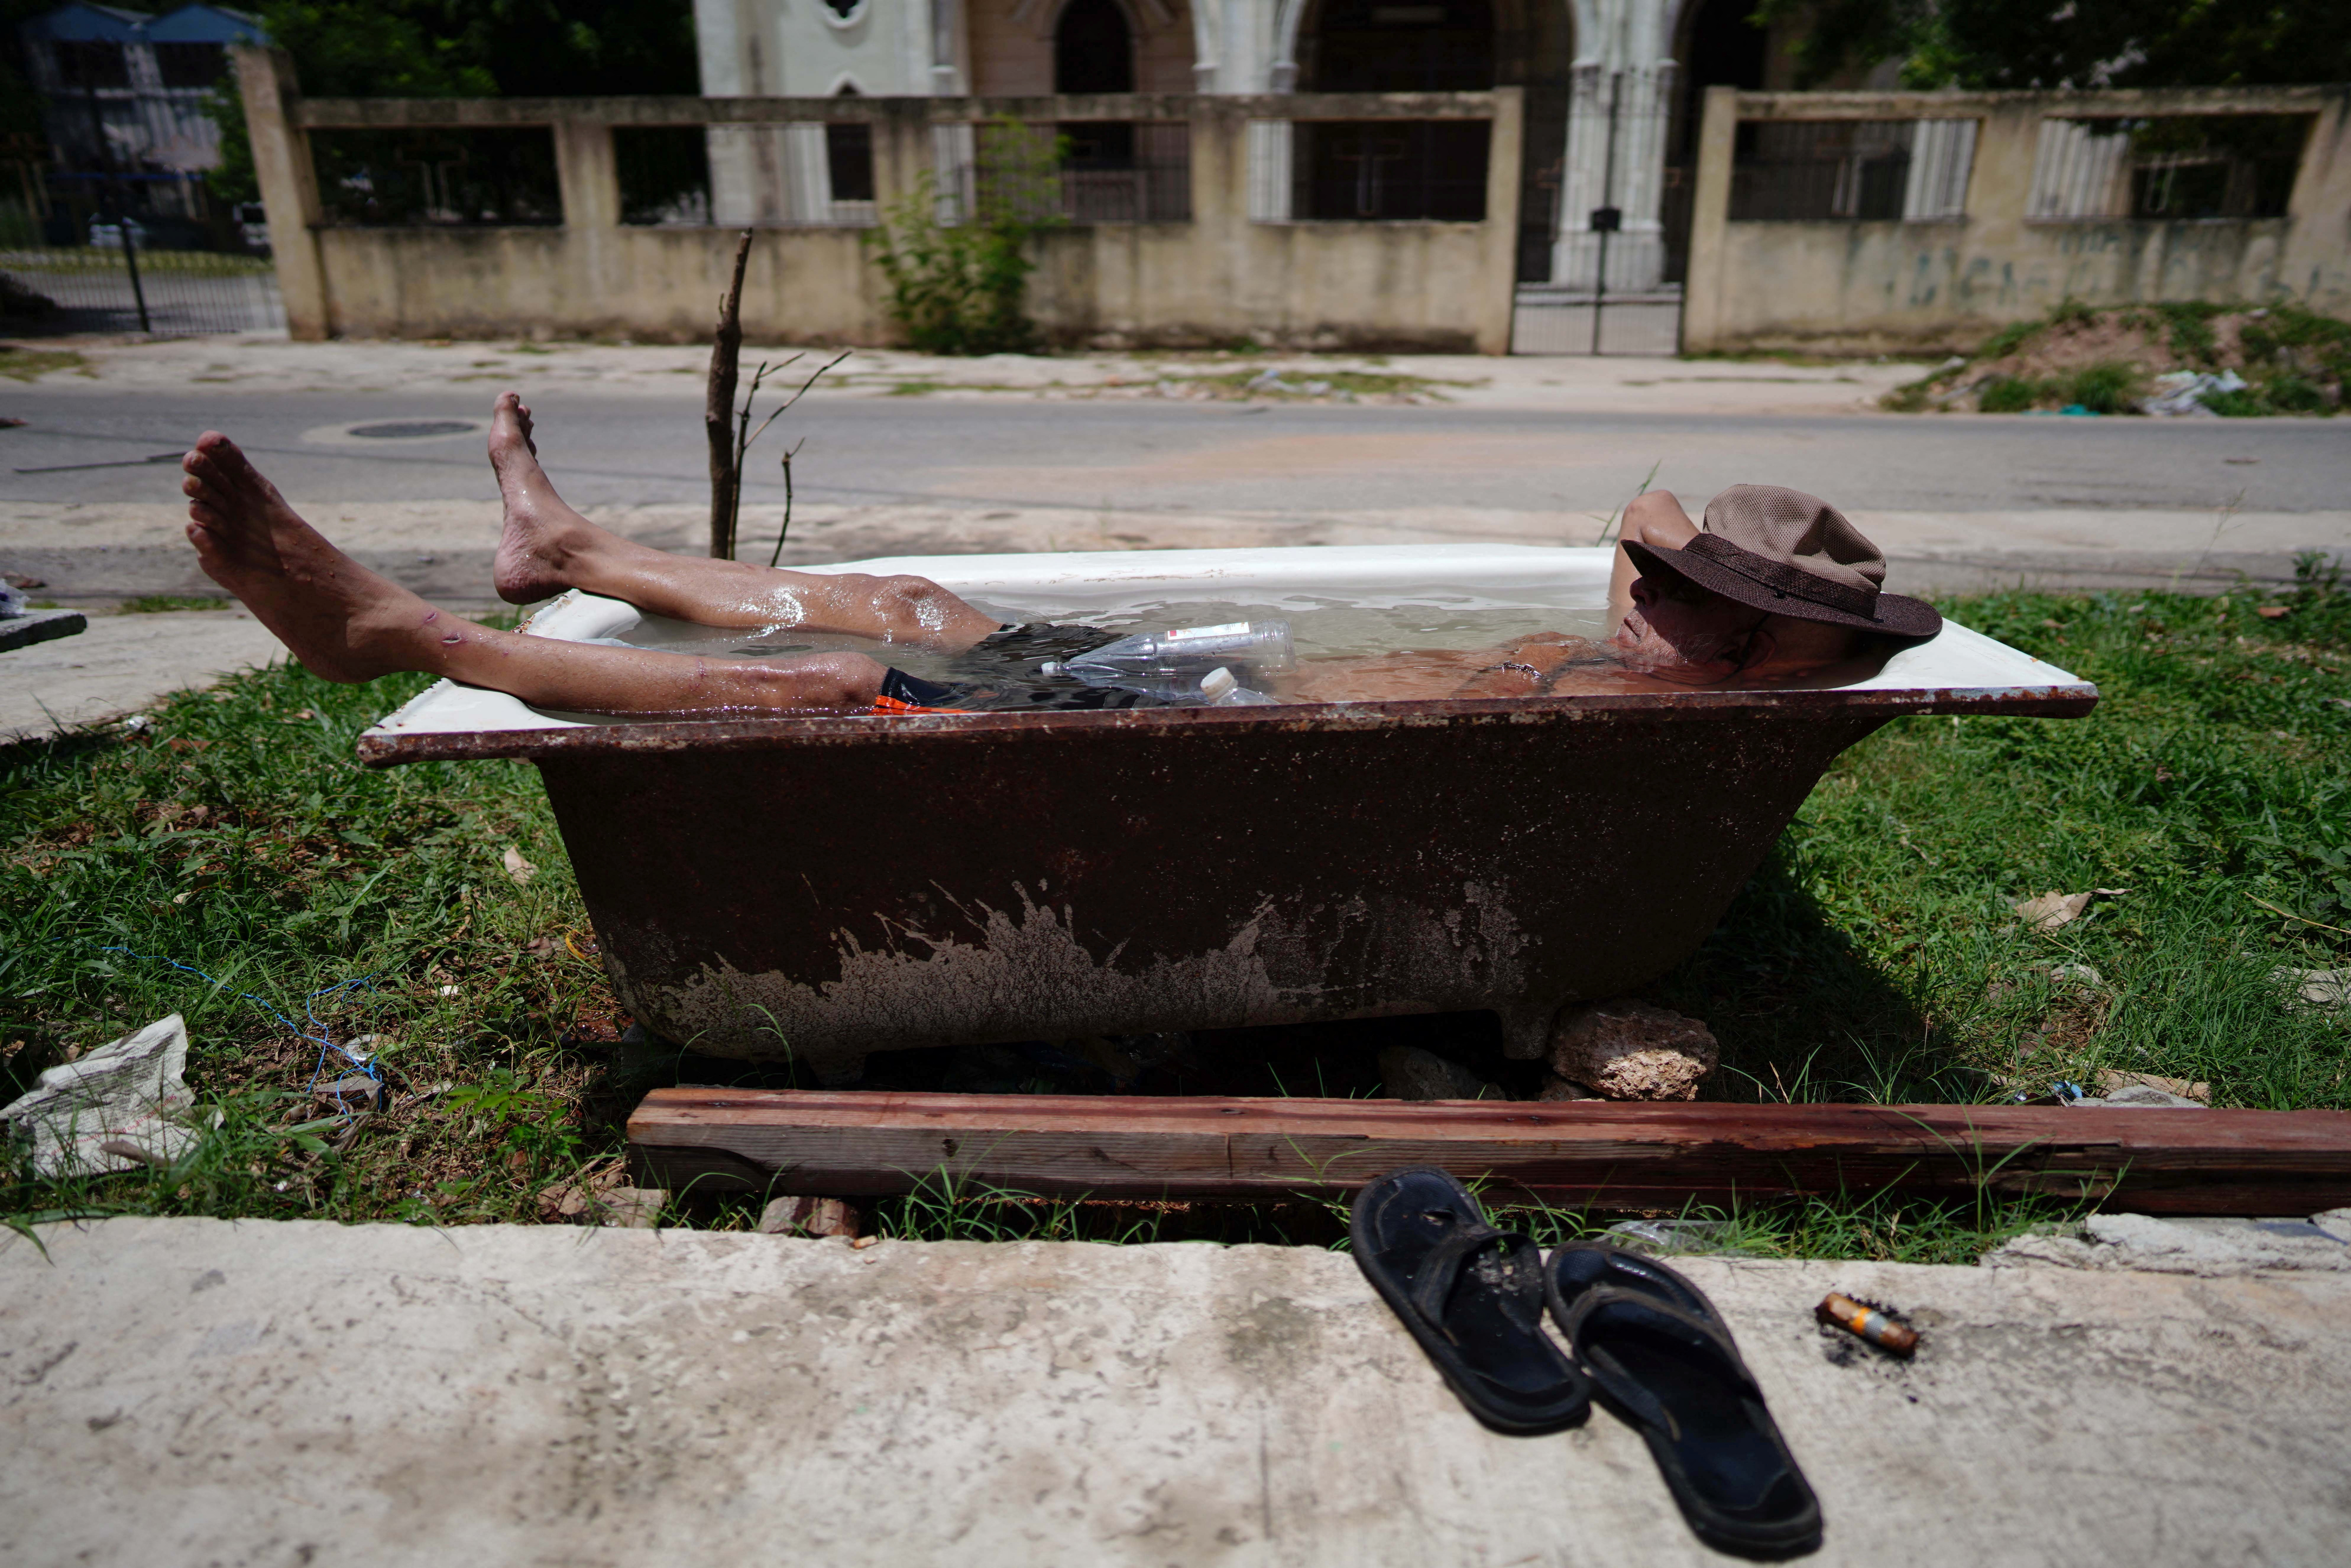 Heat wave reaches record levels in Cuba